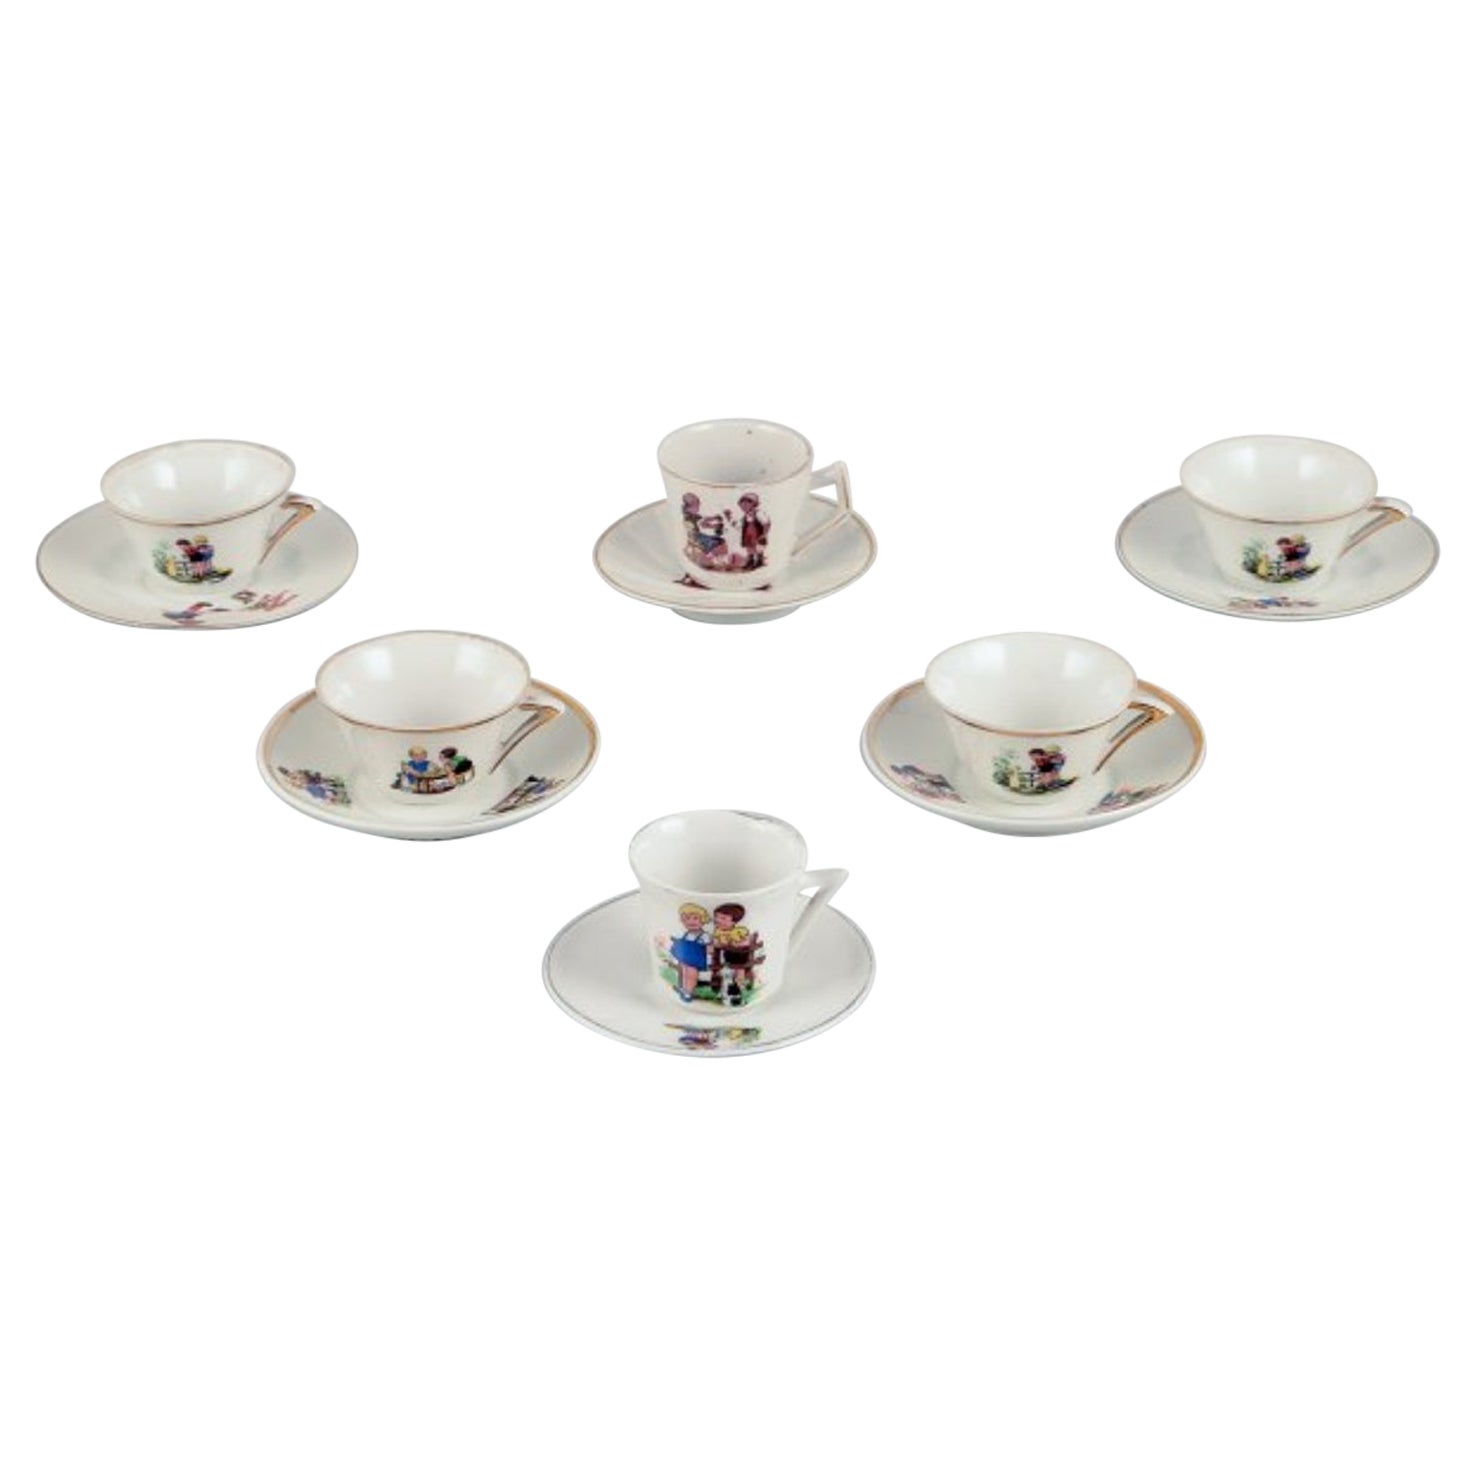 French dolls dinnerware/childrens tea set in porcelain.  For Sale